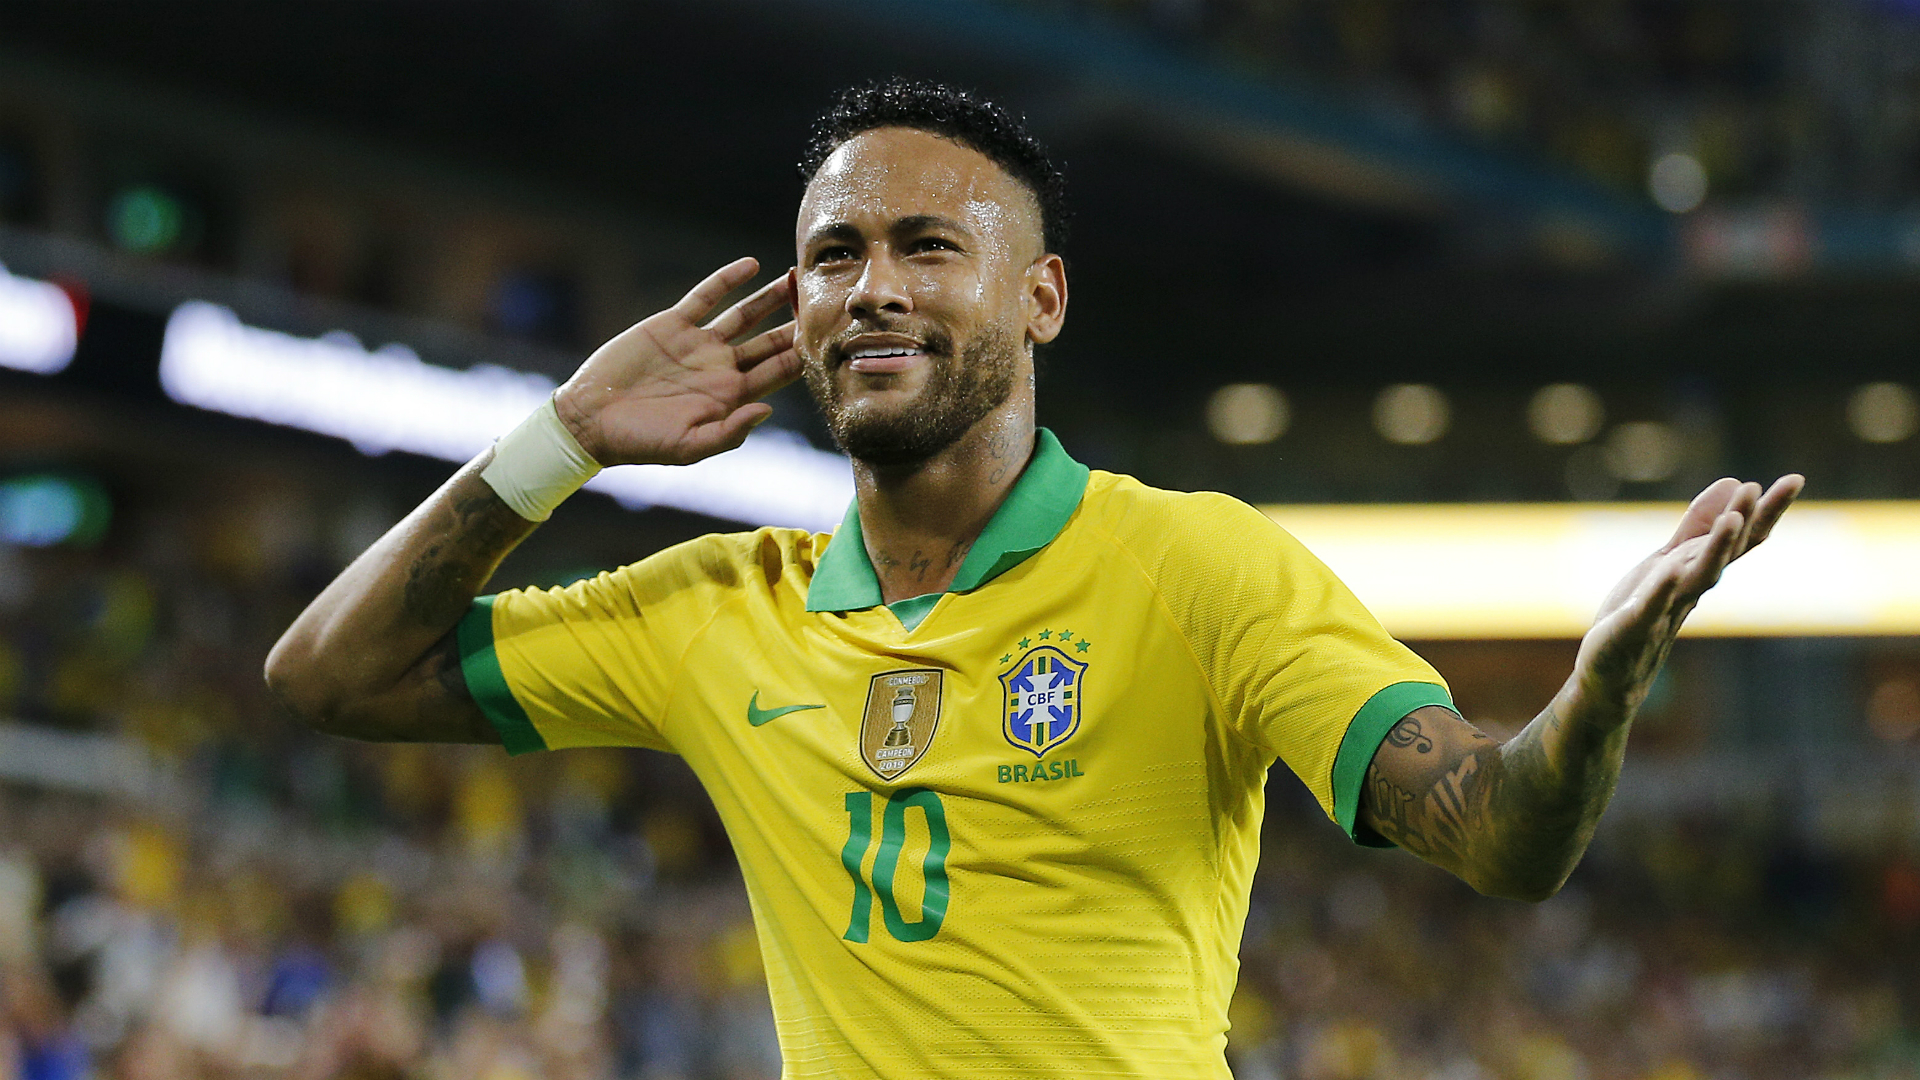 Neymar Image 2019 Brazil - 1920x1080 Wallpaper 